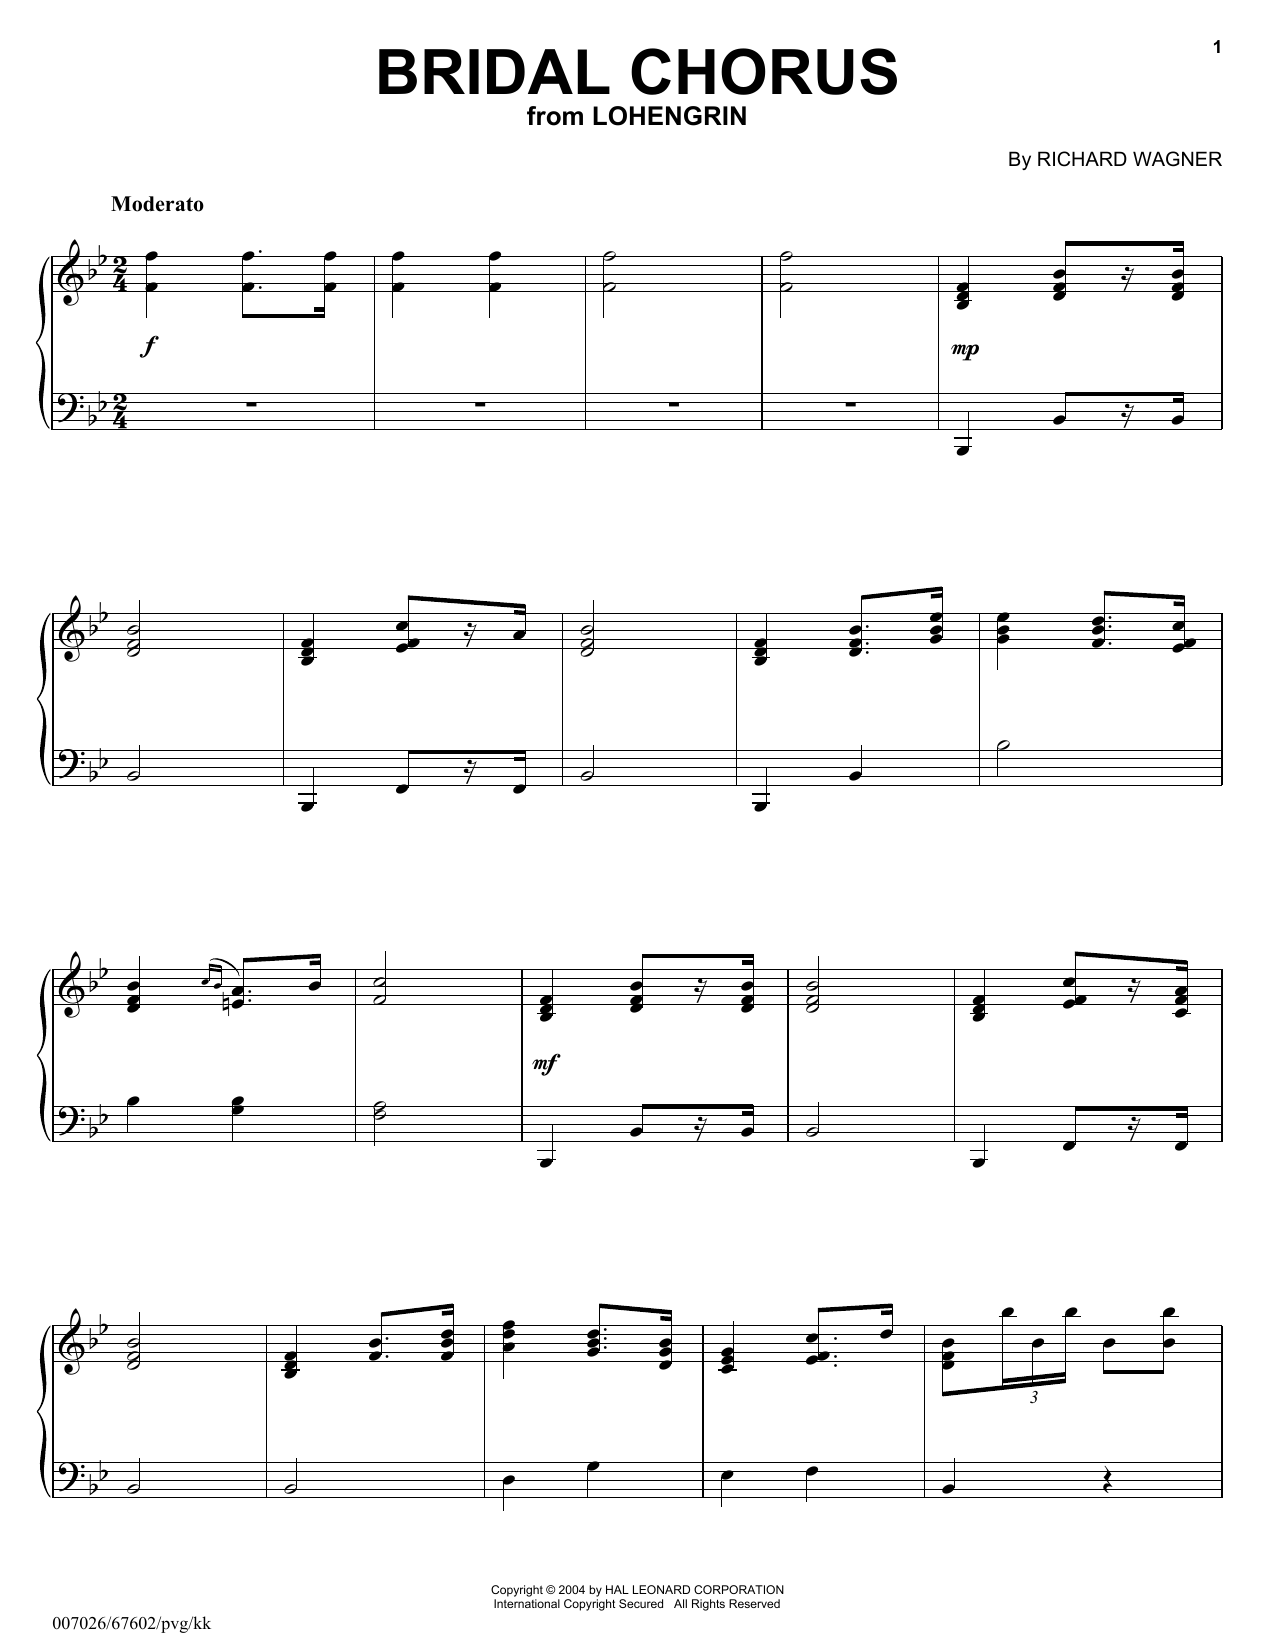 Richard Wagner Bridal Chorus Sheet Music Notes & Chords for Clarinet - Download or Print PDF